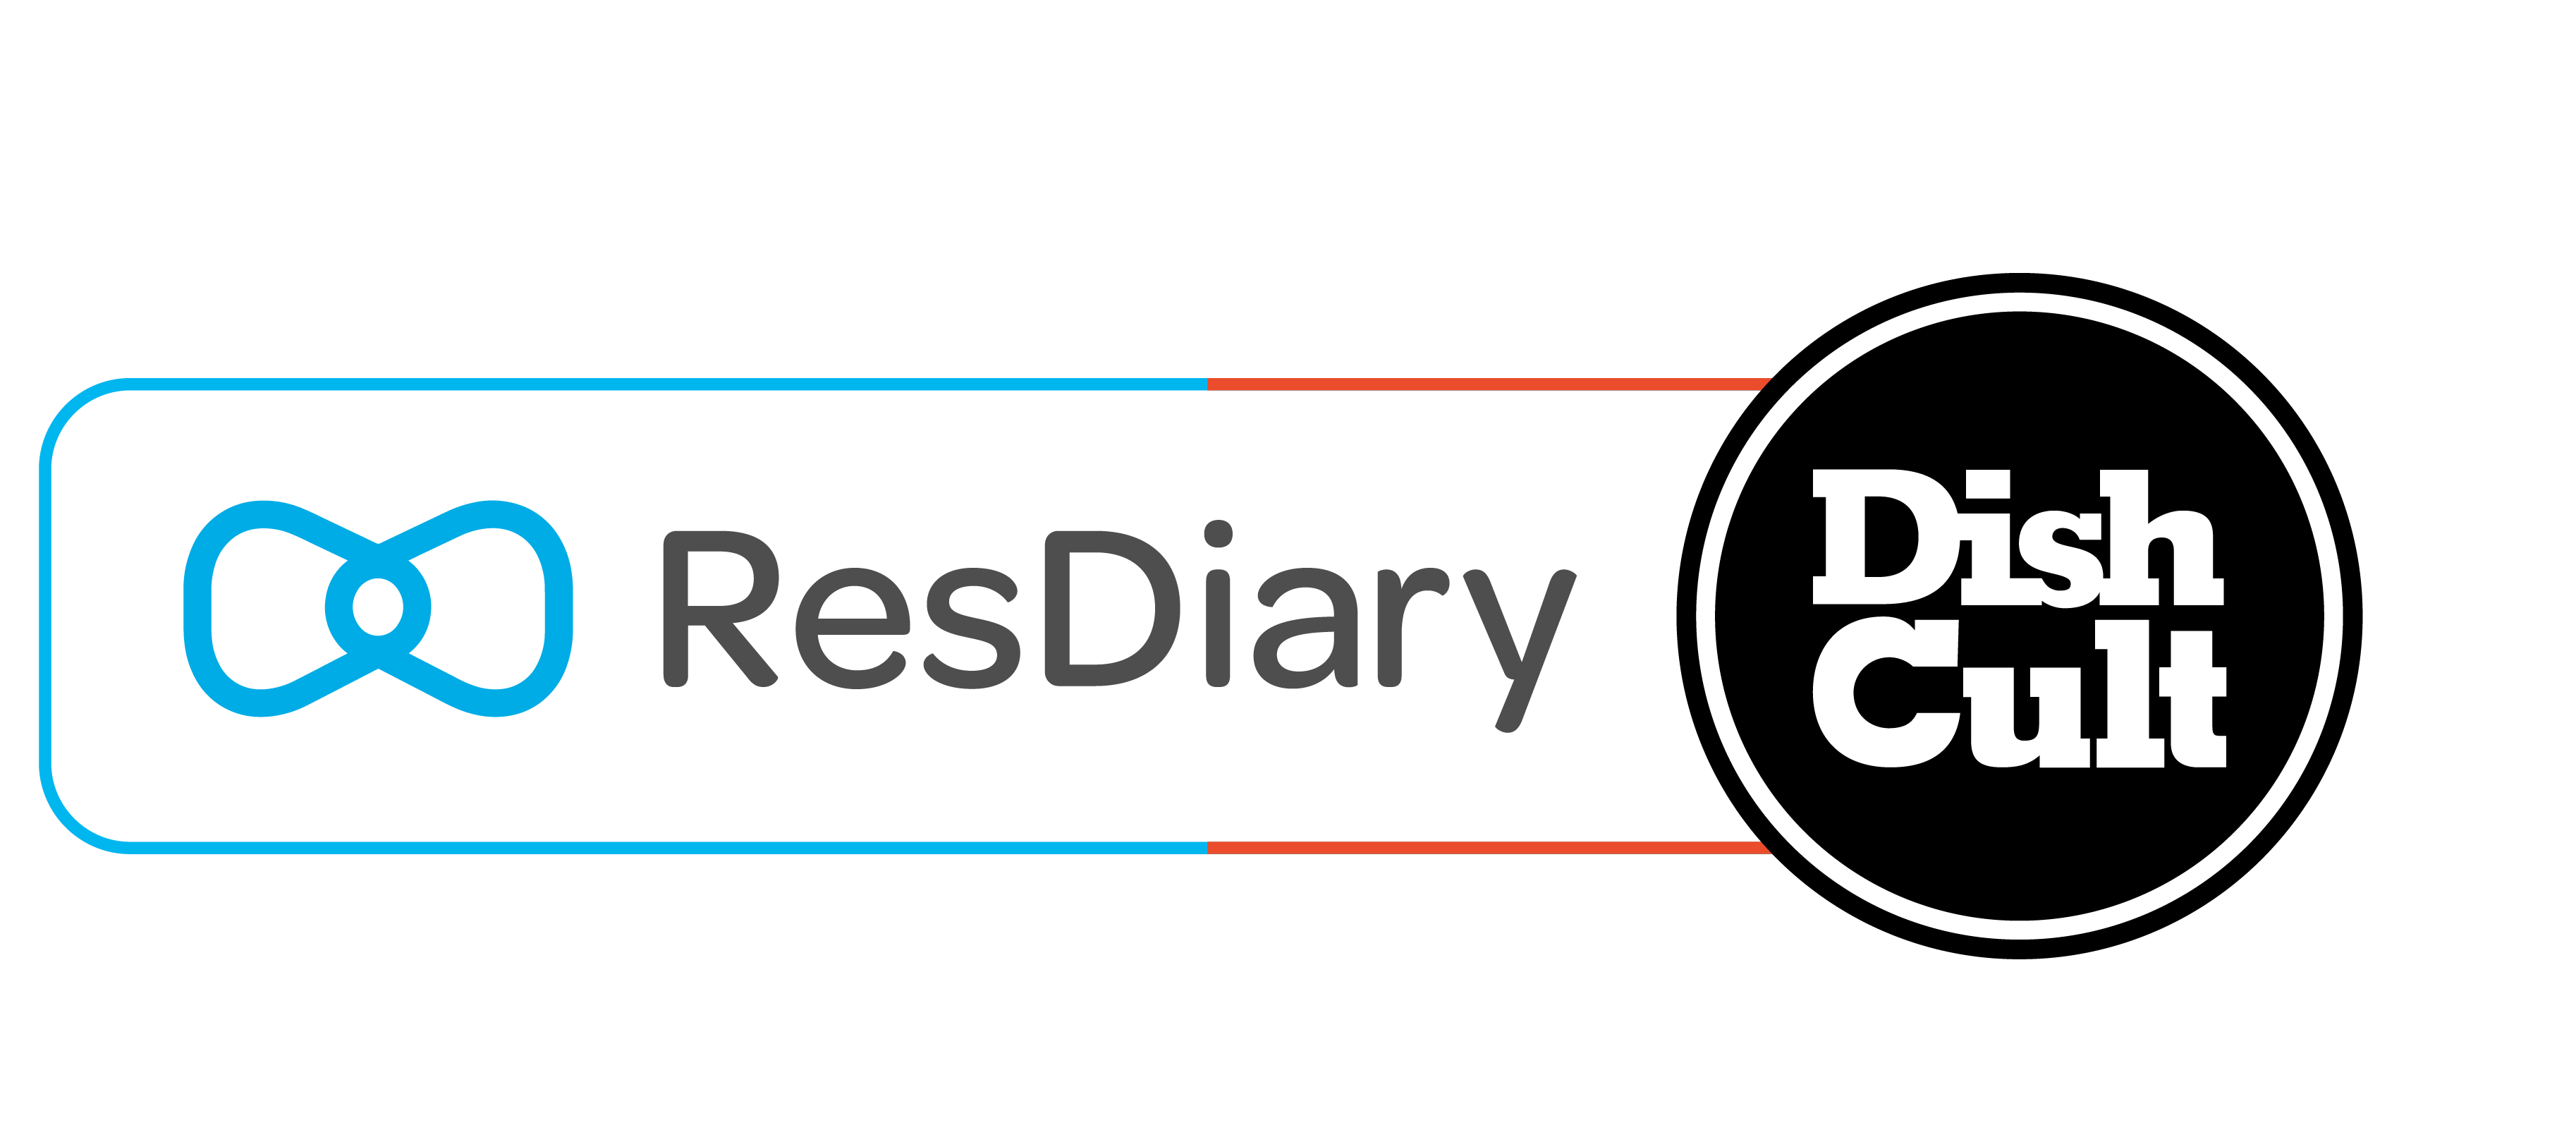 ResDiary Dish Cult Logo Digital white